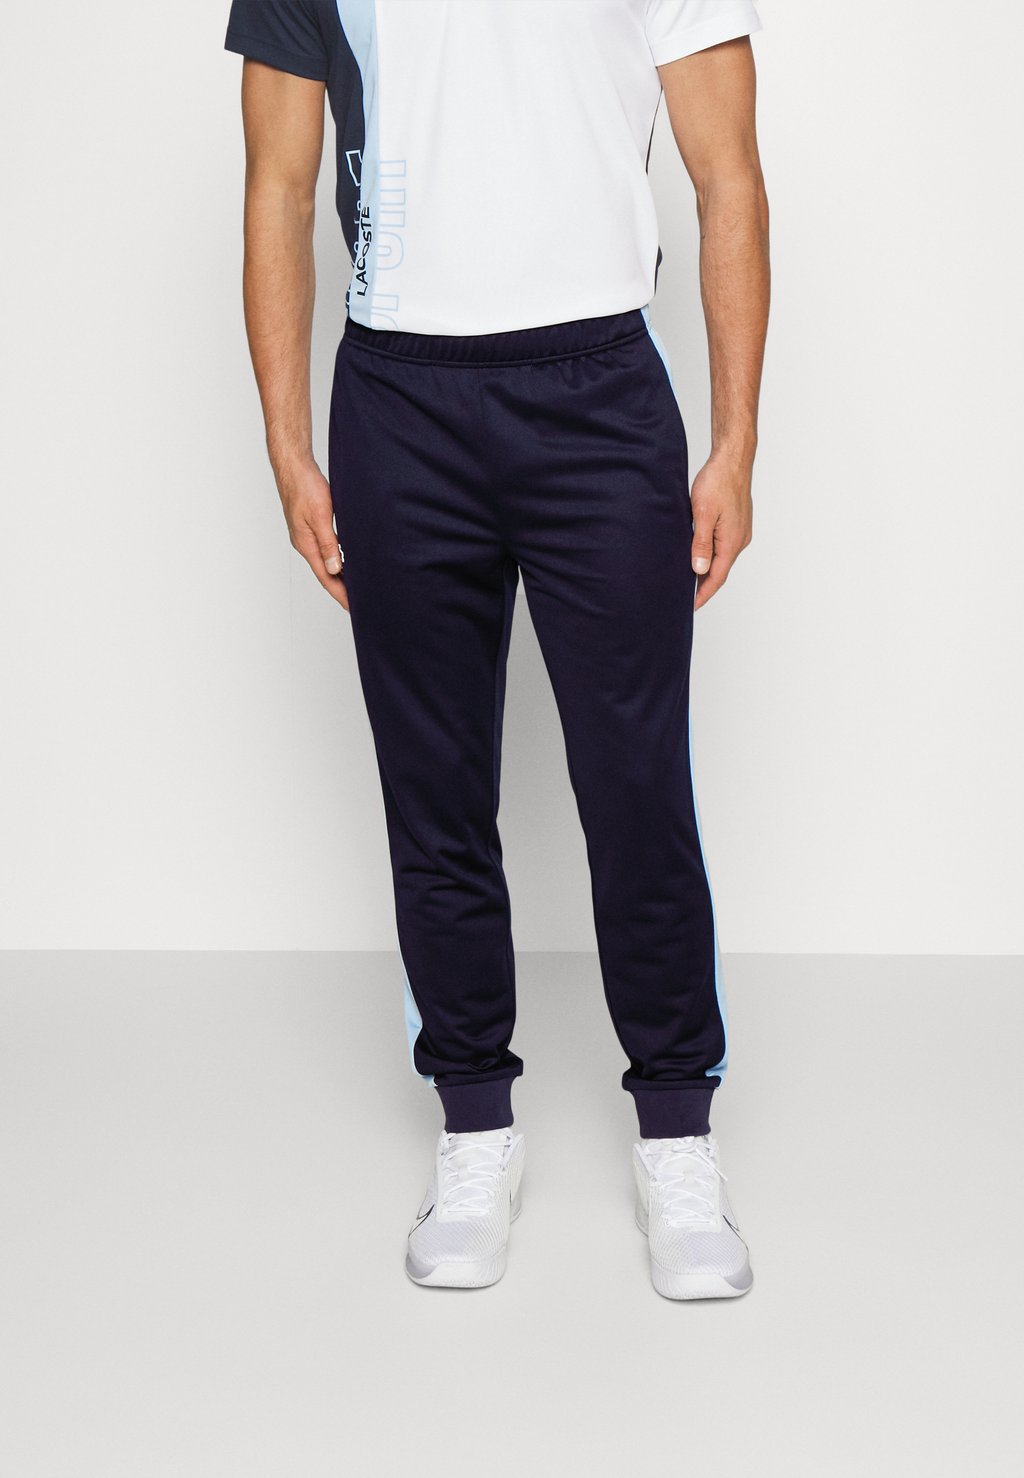 Спортивные брюки Tennis Pant Lacoste, цвет navy blue/overview шорты lacoste sport lined tennis shorts цвет navy blue